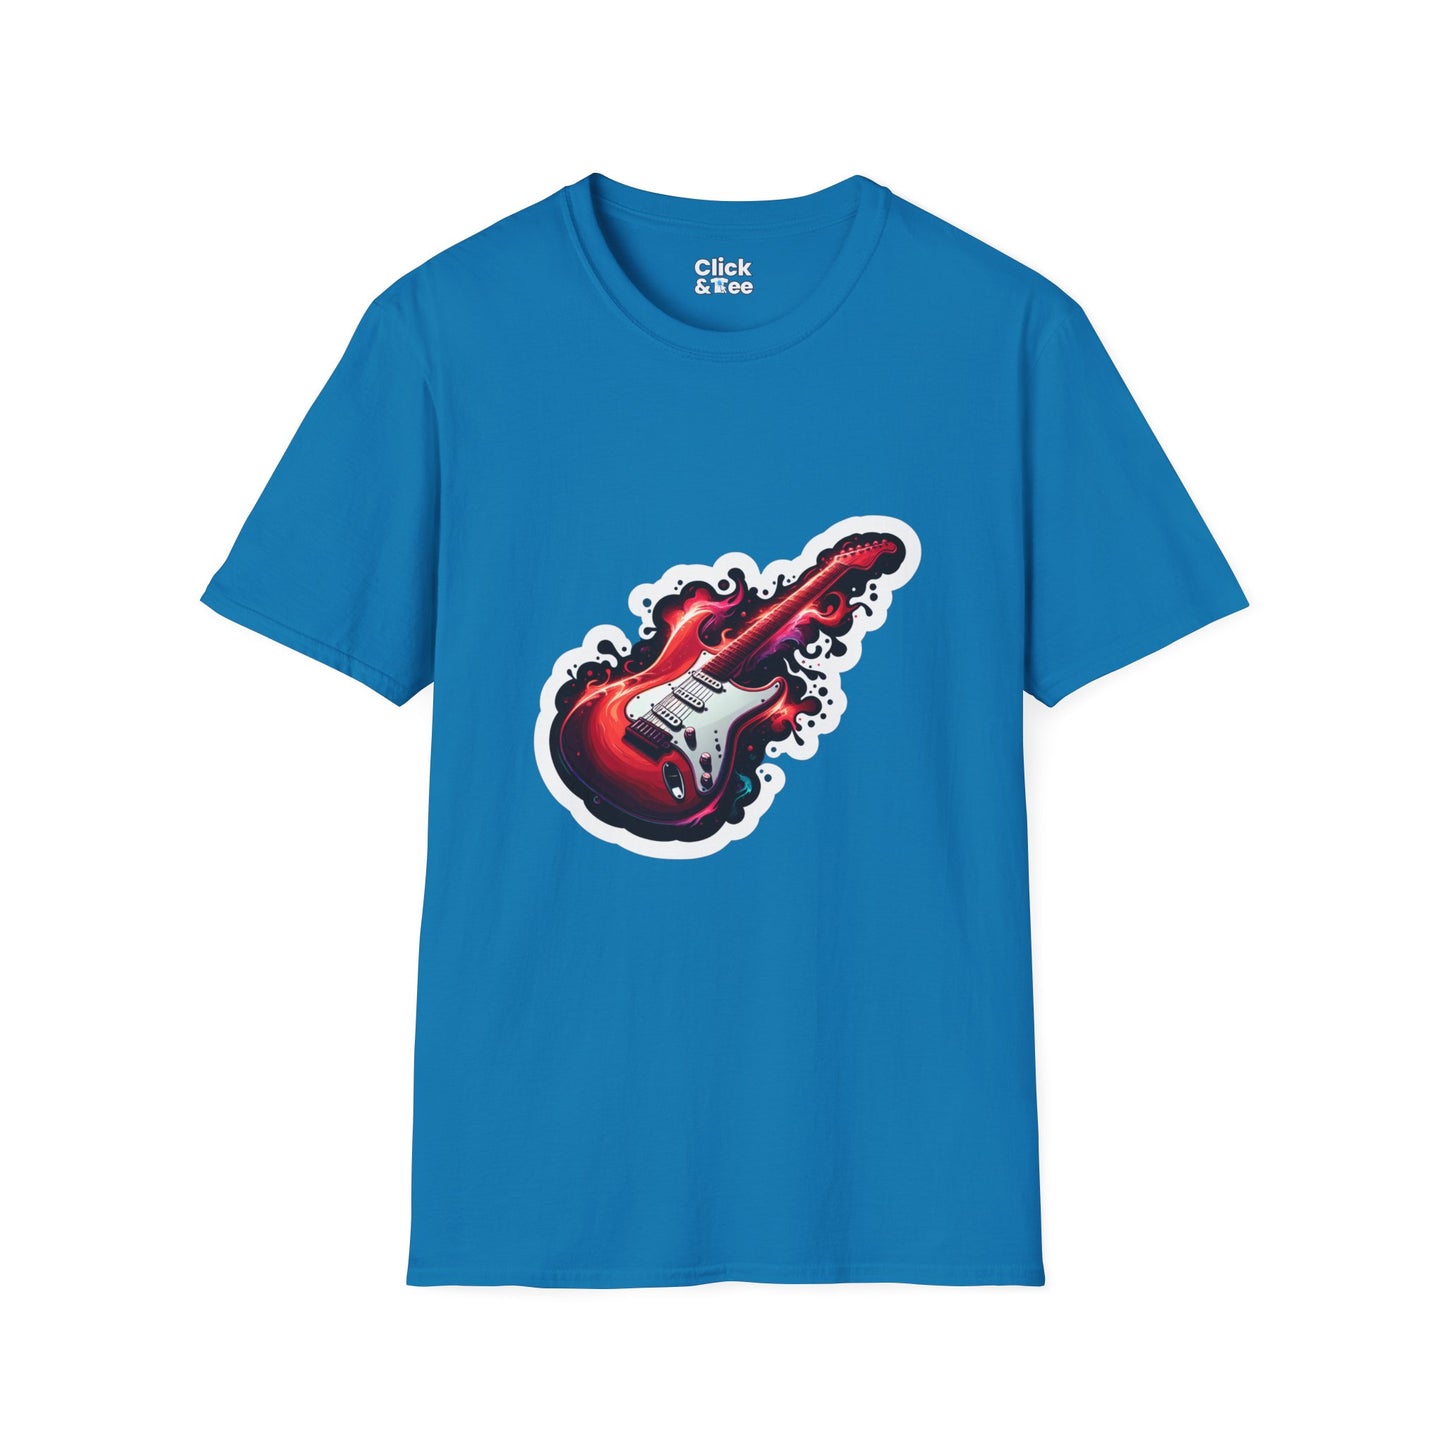 Color Splatter T-Shirt - Red  Legendary Guitar Glowing - Color Splatter Style T-Shirt